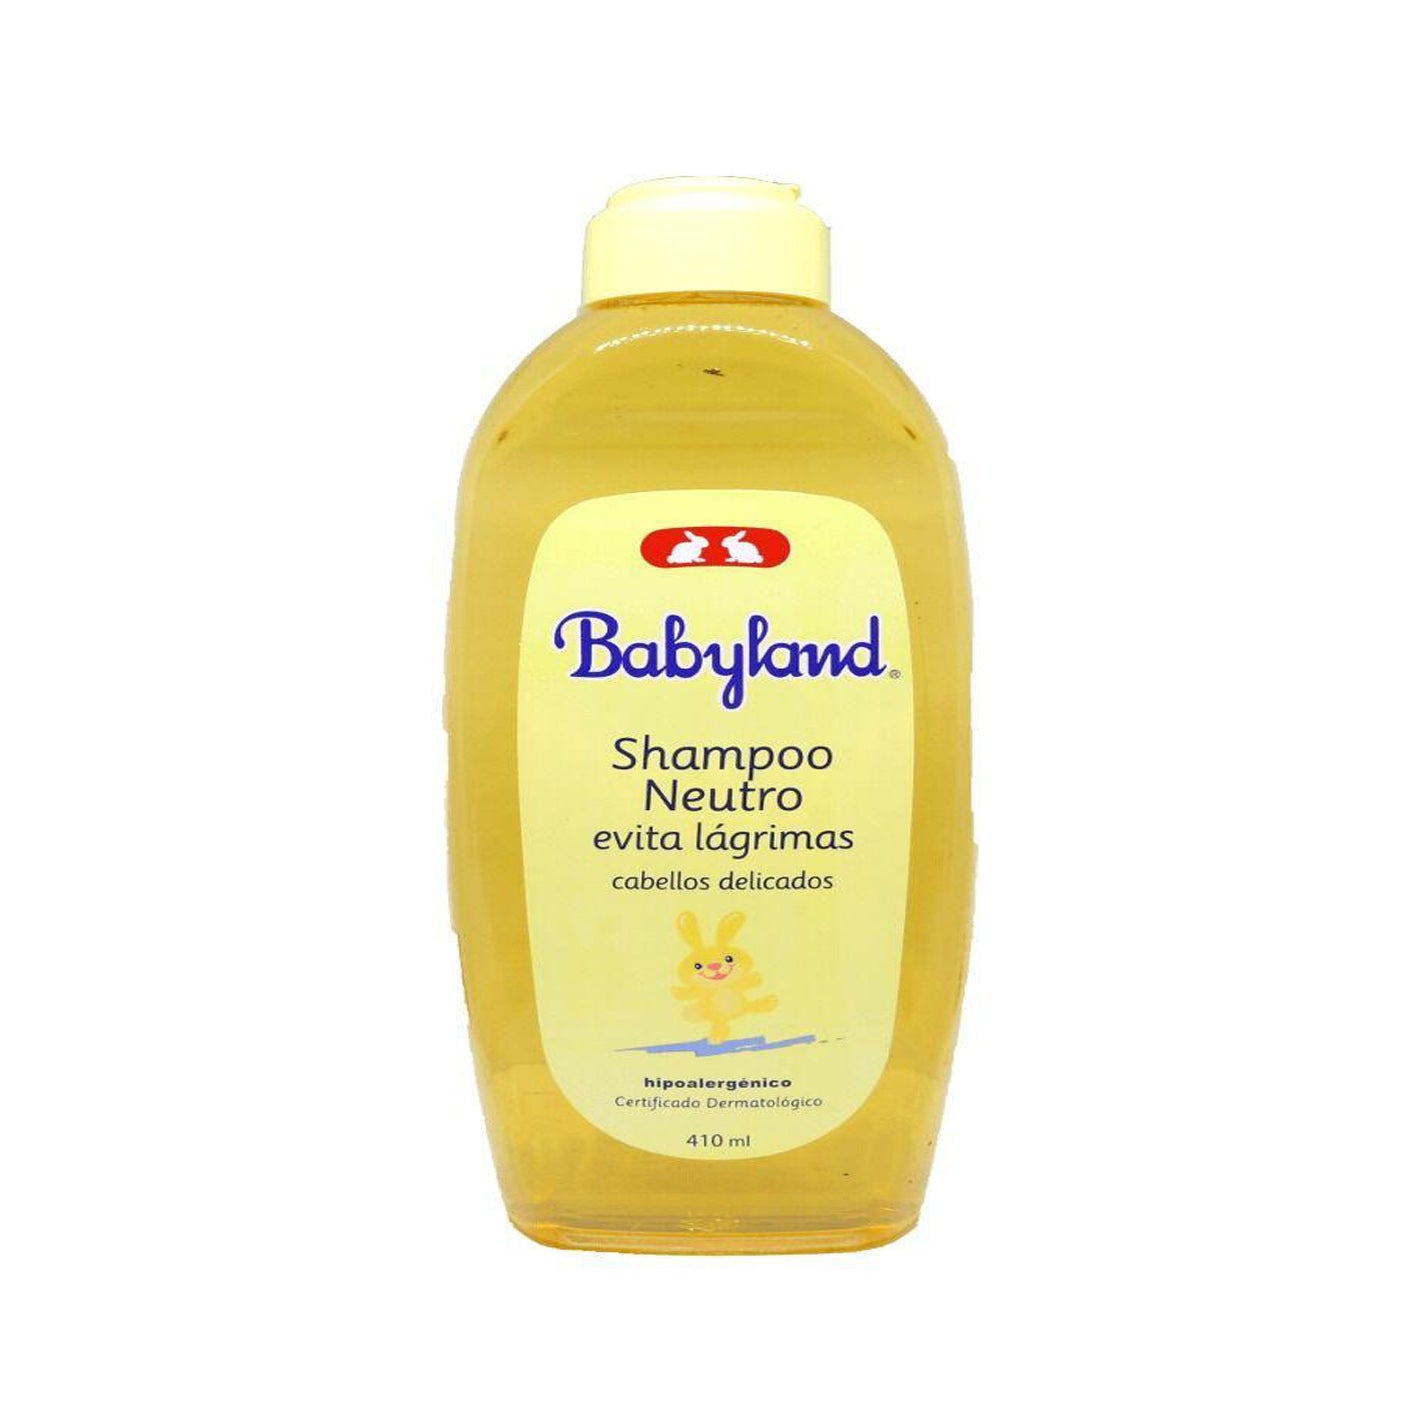 Babyland Shampoo Neutro